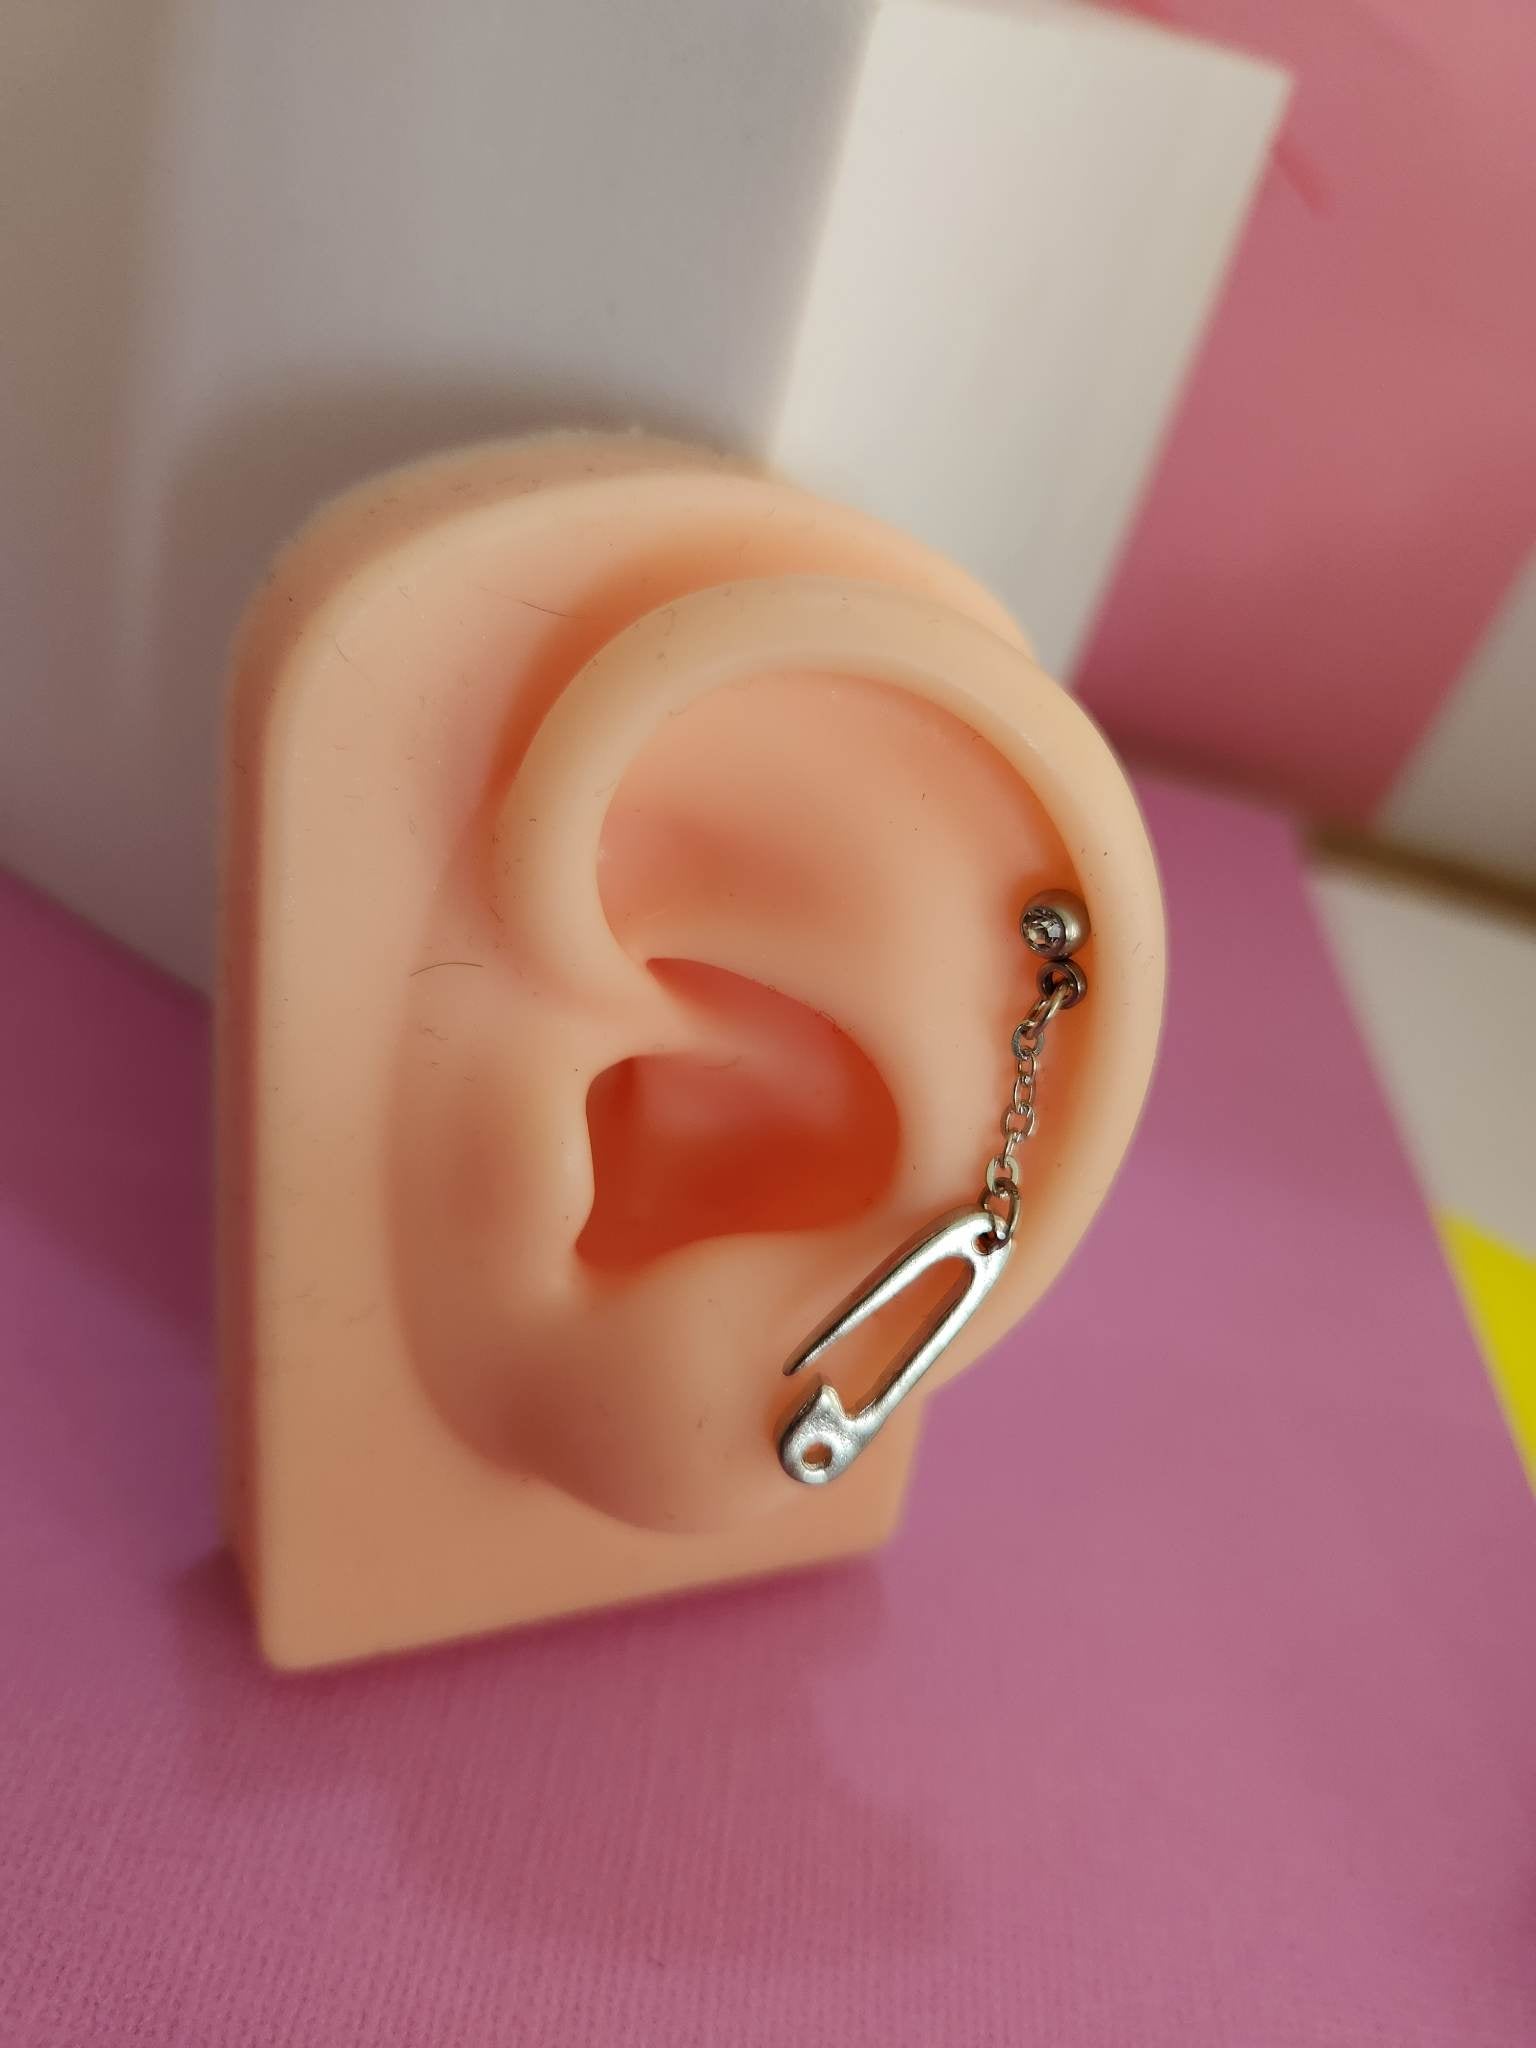 Safety Pin Dangle Ear Piercing Tragus Cartilage Flat Rook Earrings - Pierced n Proud